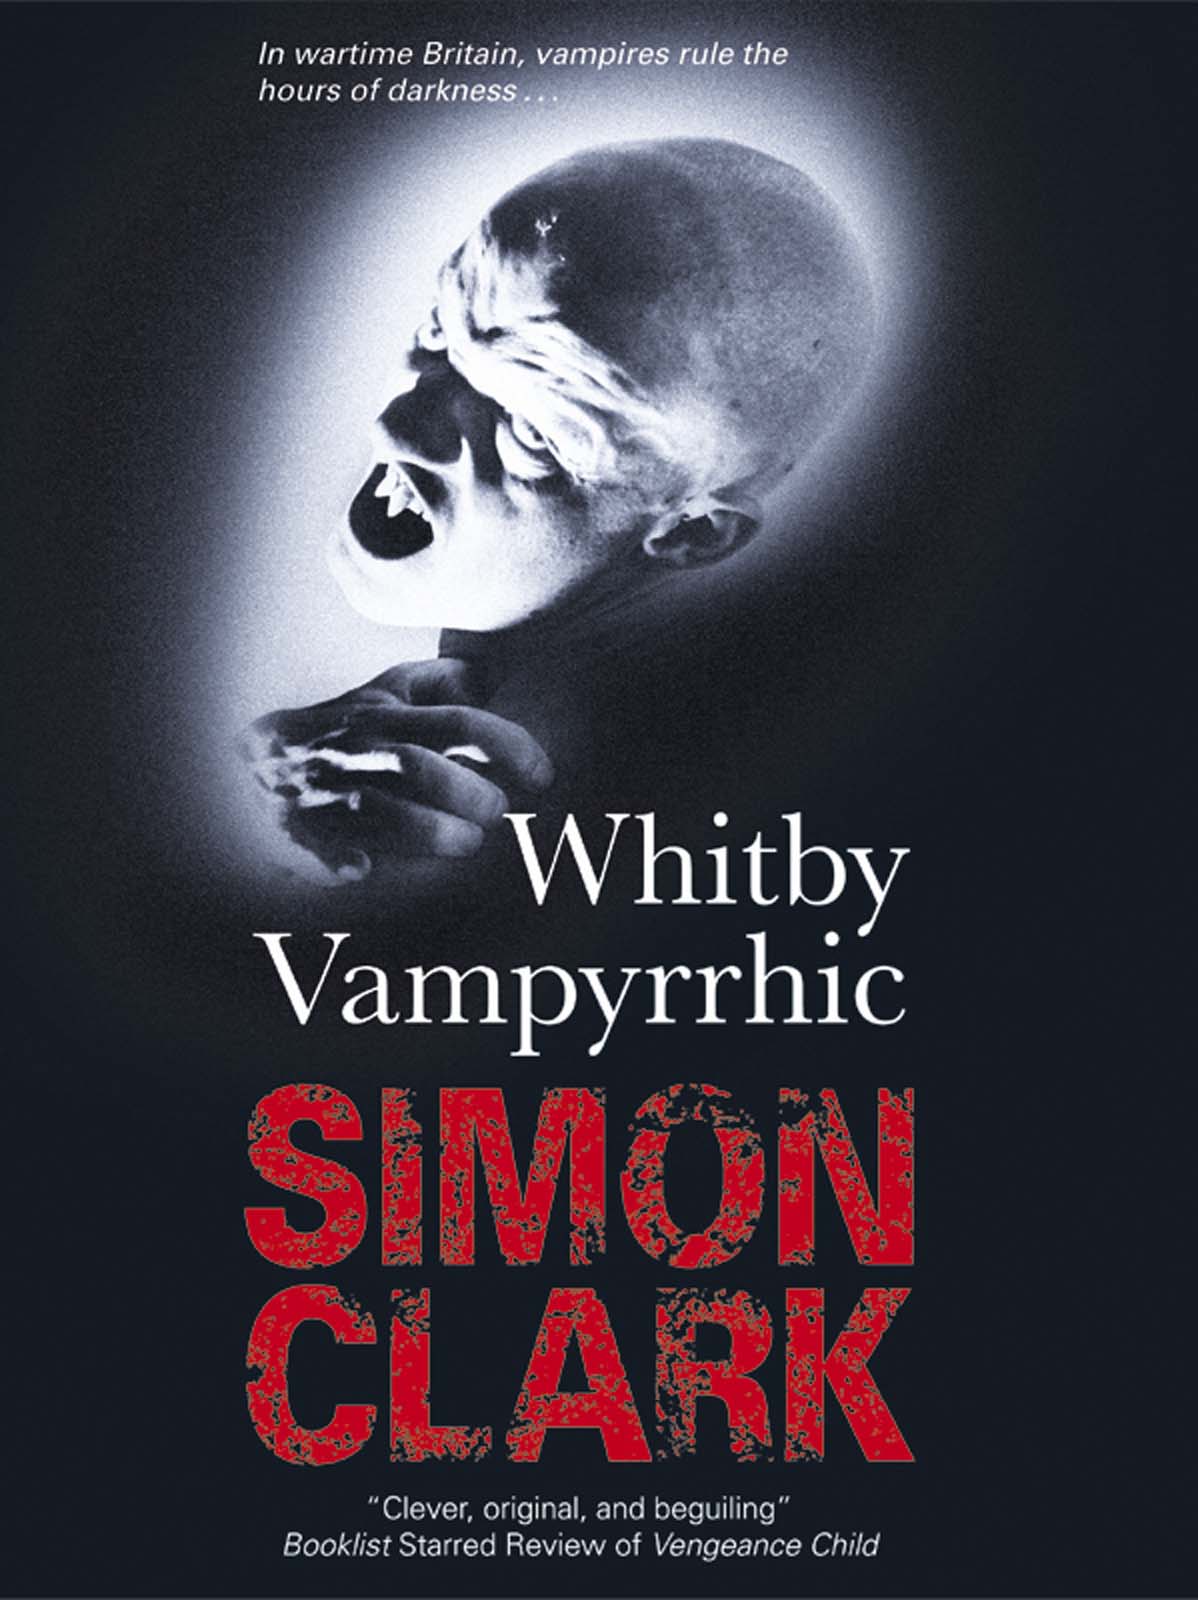 Whitby Vampyrrhic by Simon Clark